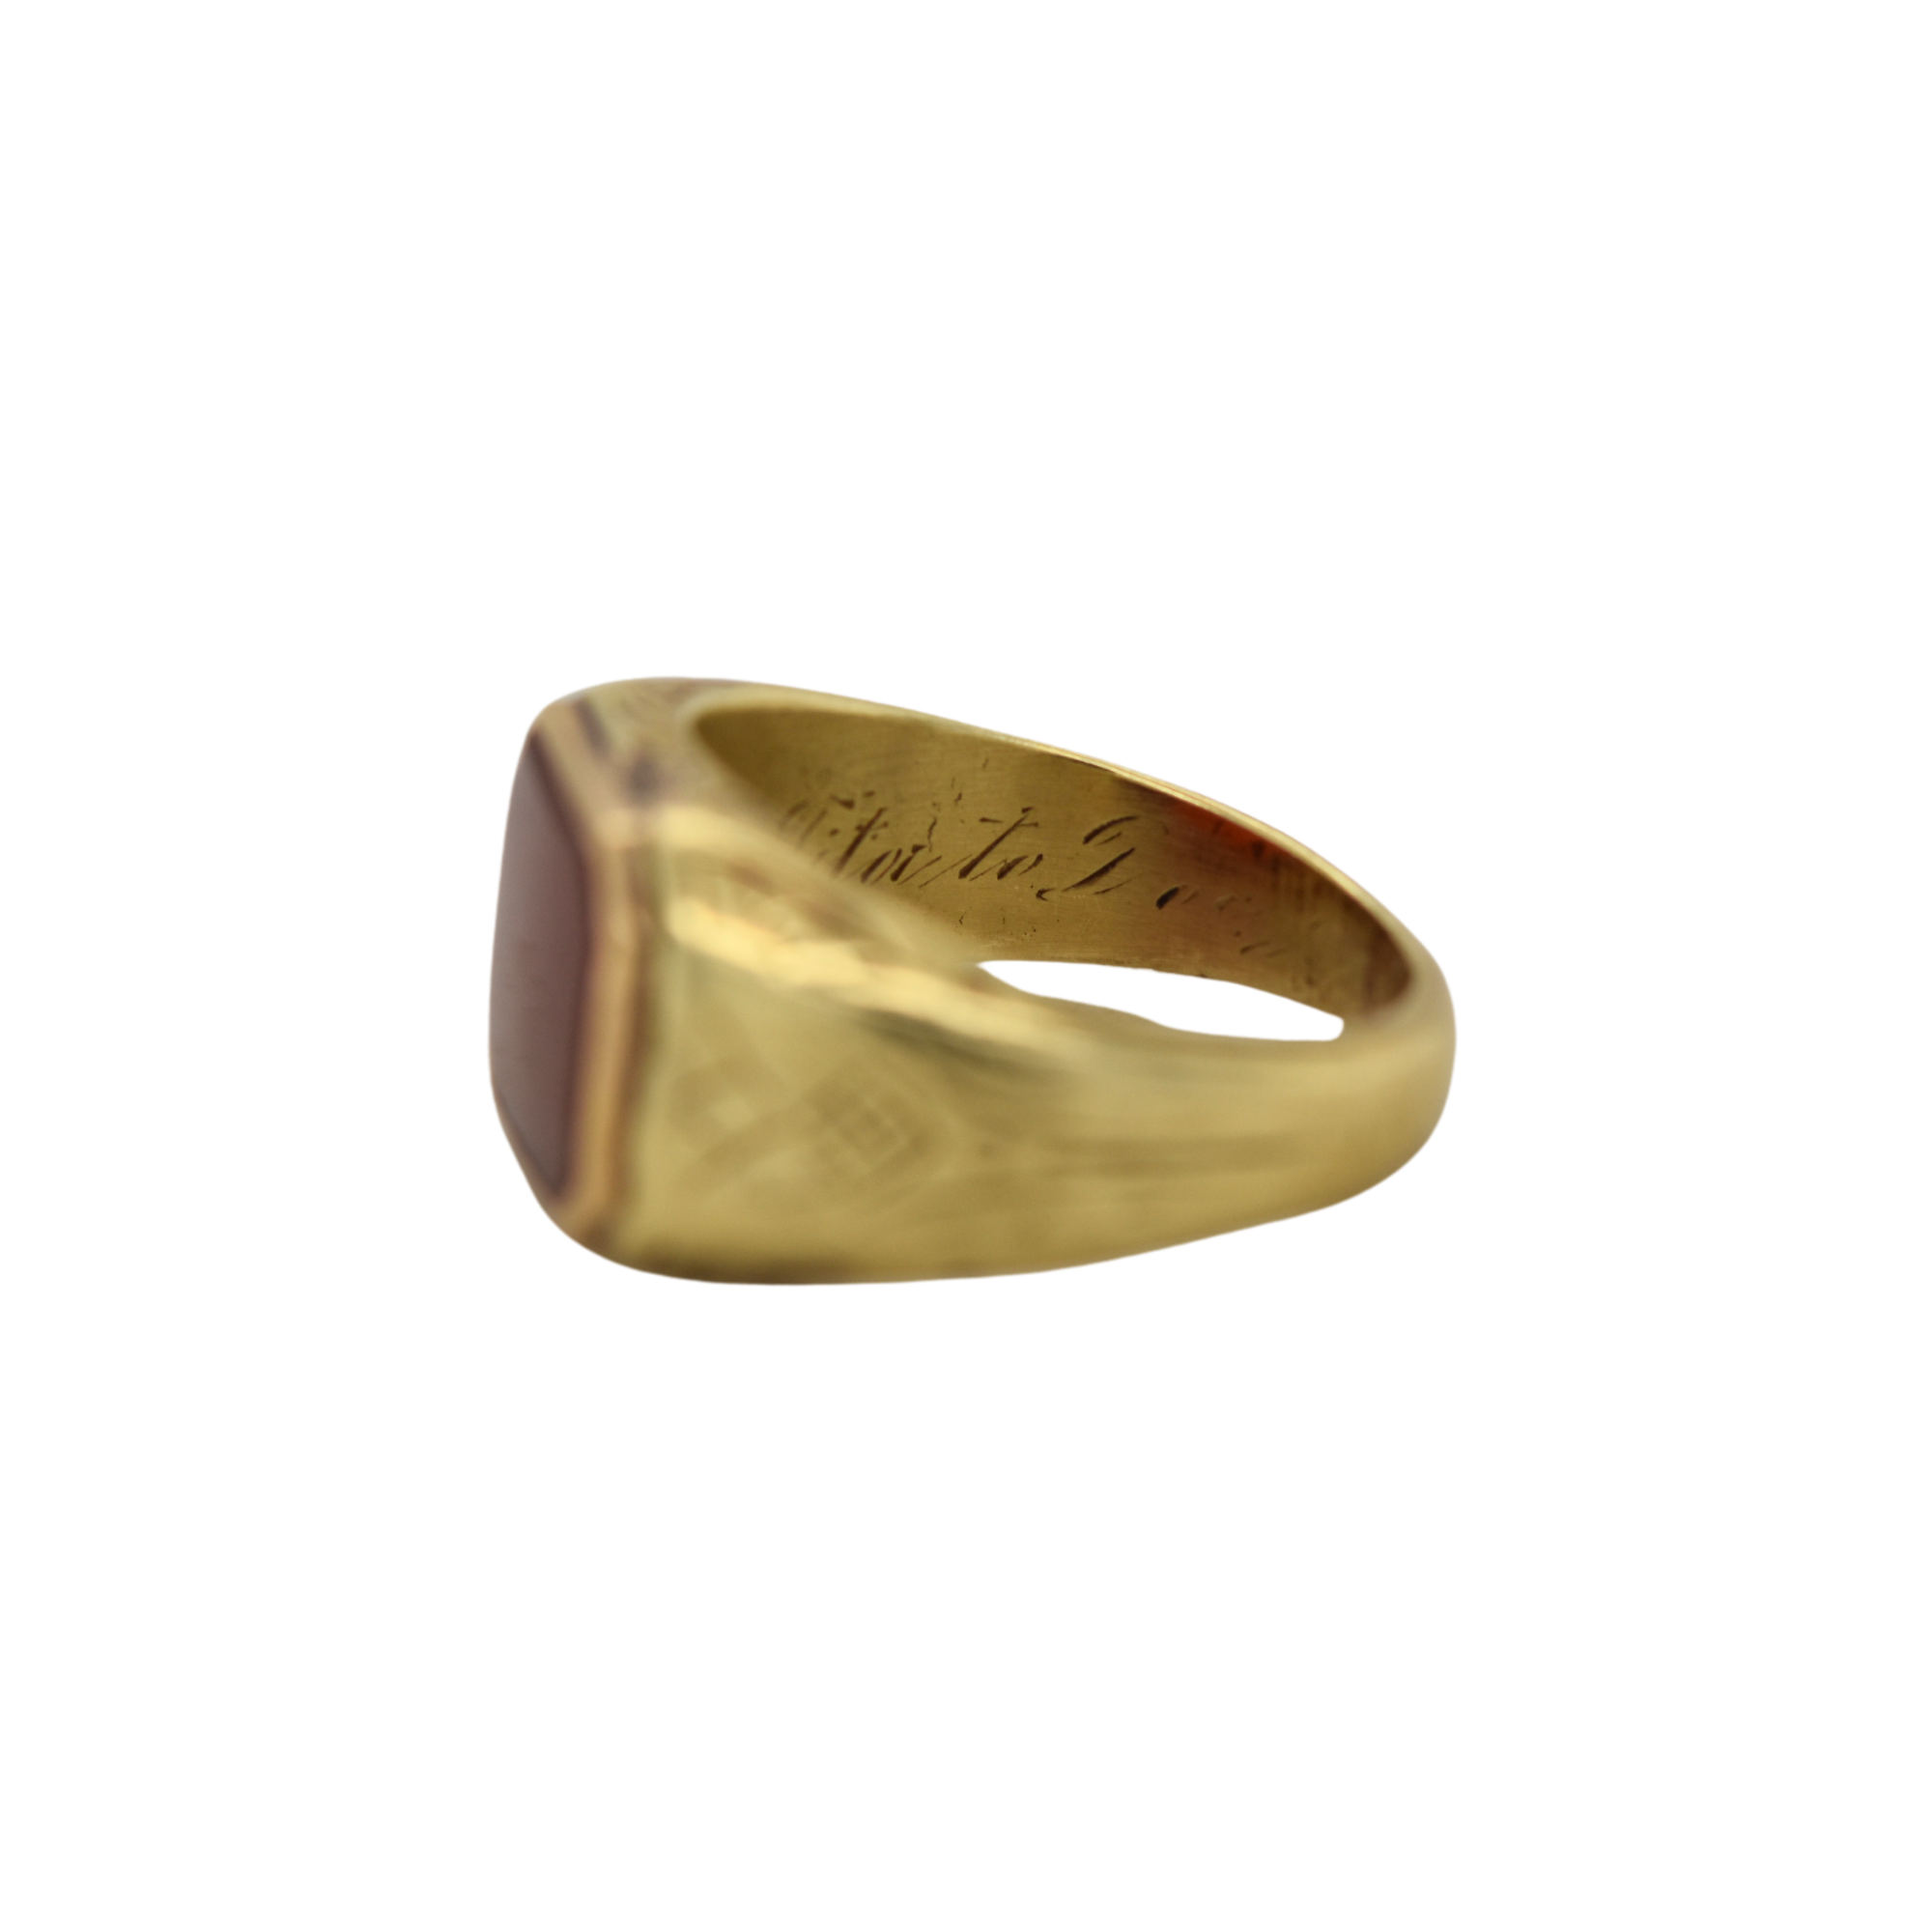 Vintage Carnelian Signet Ring